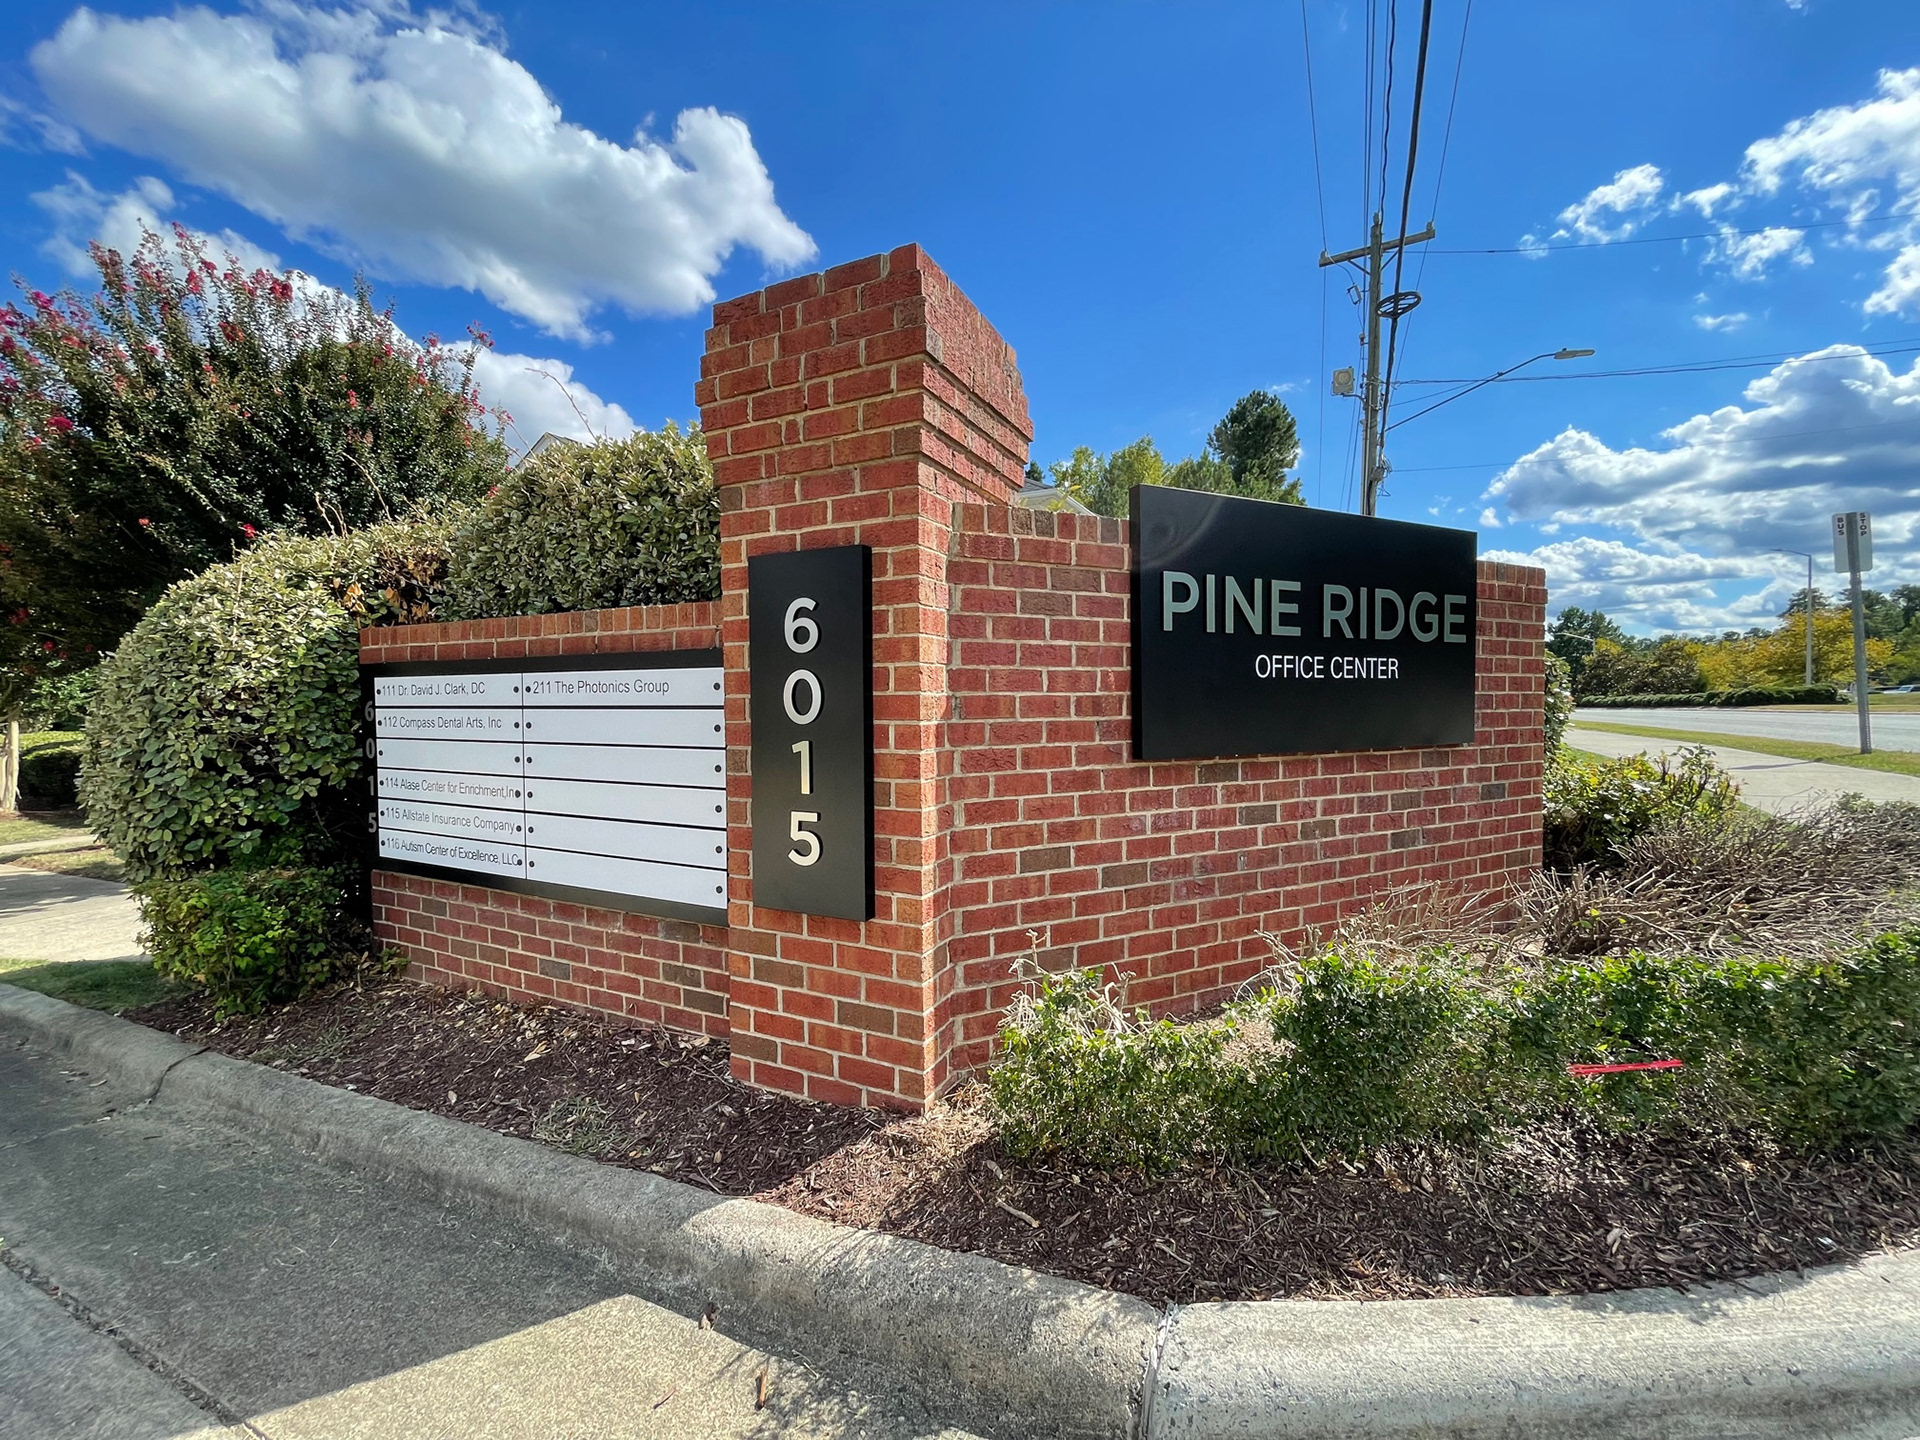 paula manochio - Pine Ridge Apartments and Office Center